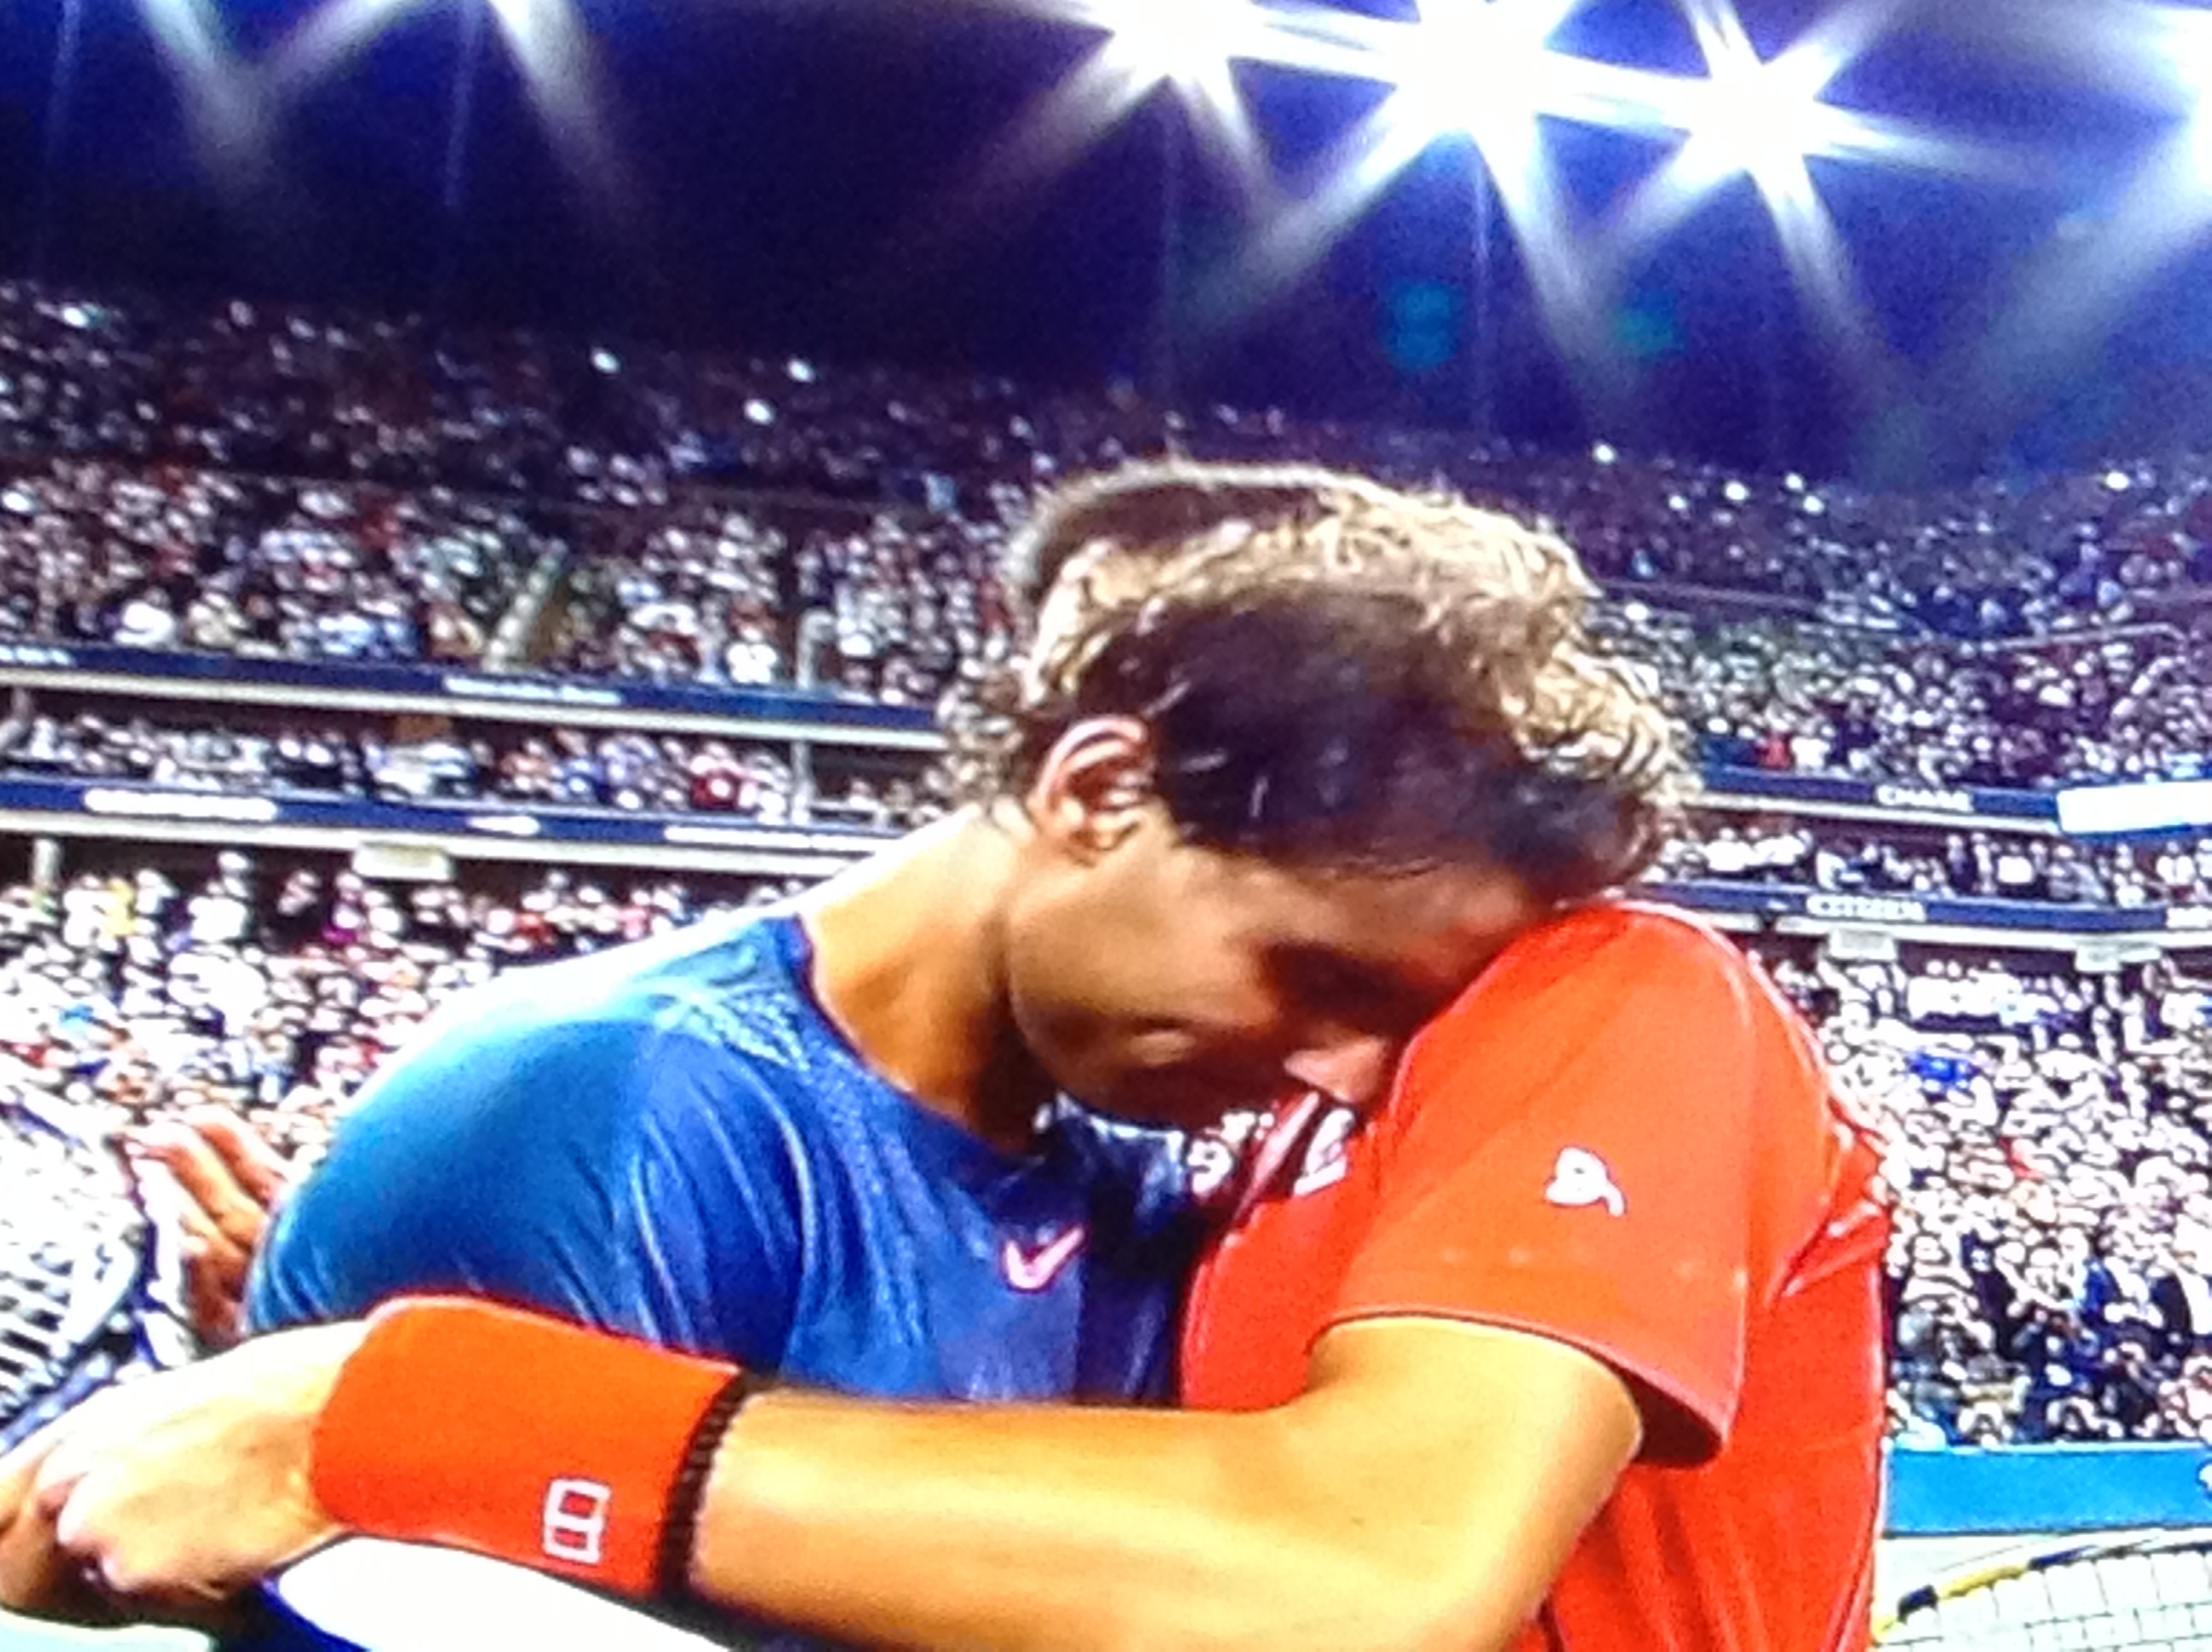 2013 Tennis US Open: A love story